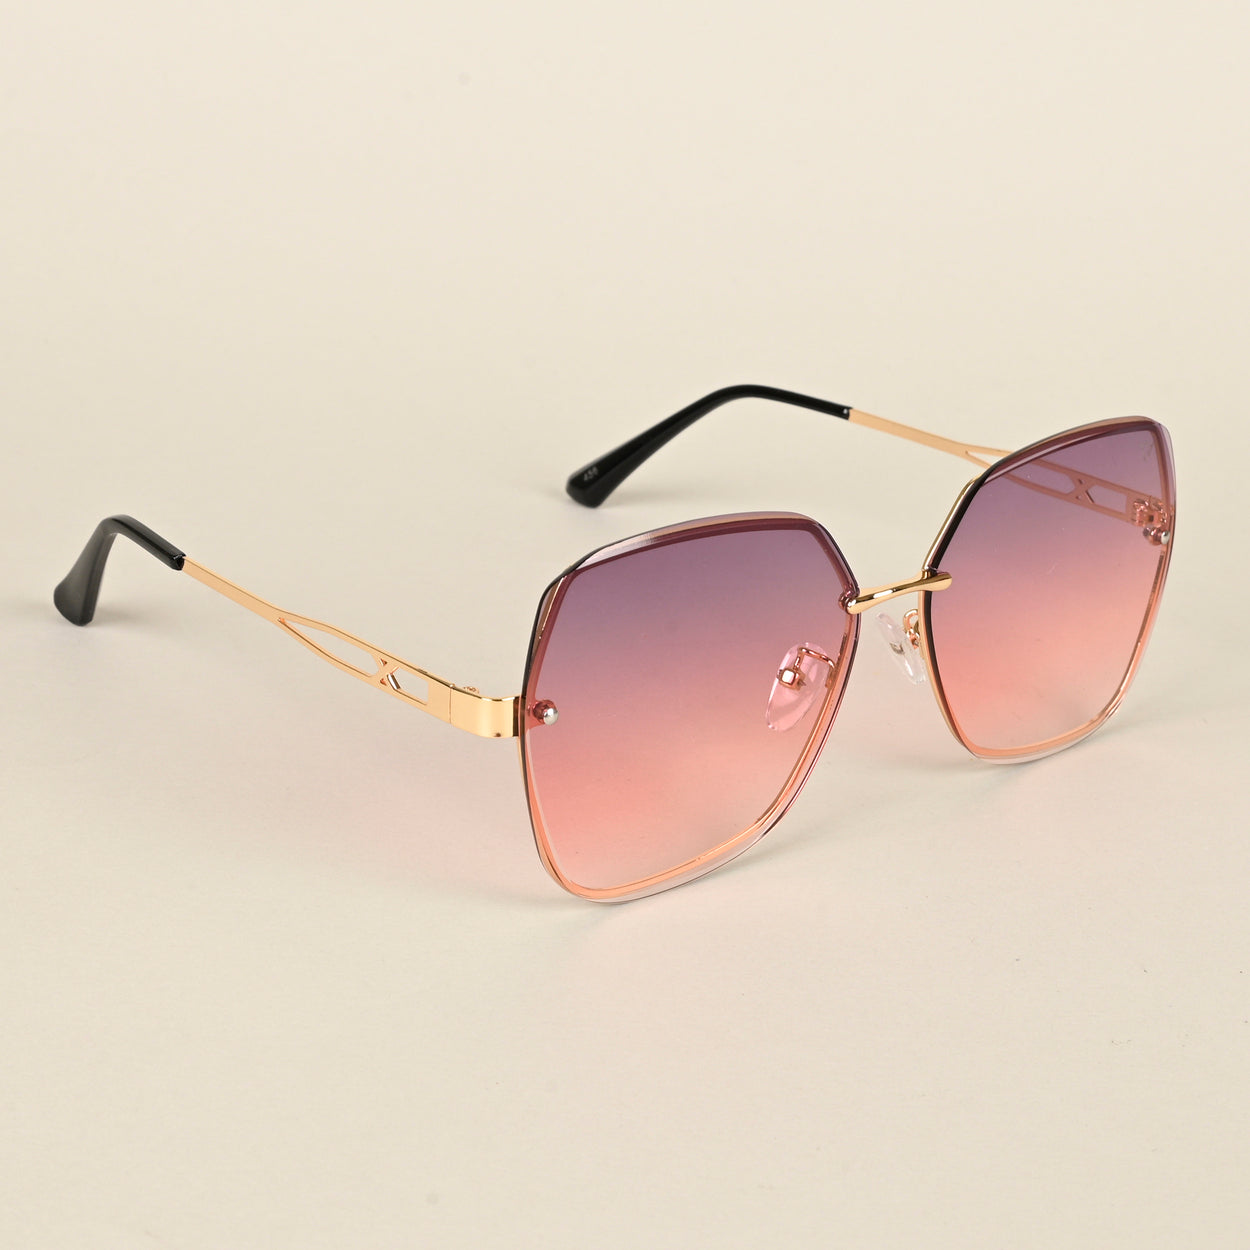 Voyage Pink & Purple Oversize Sunglasses for Women - MG4320